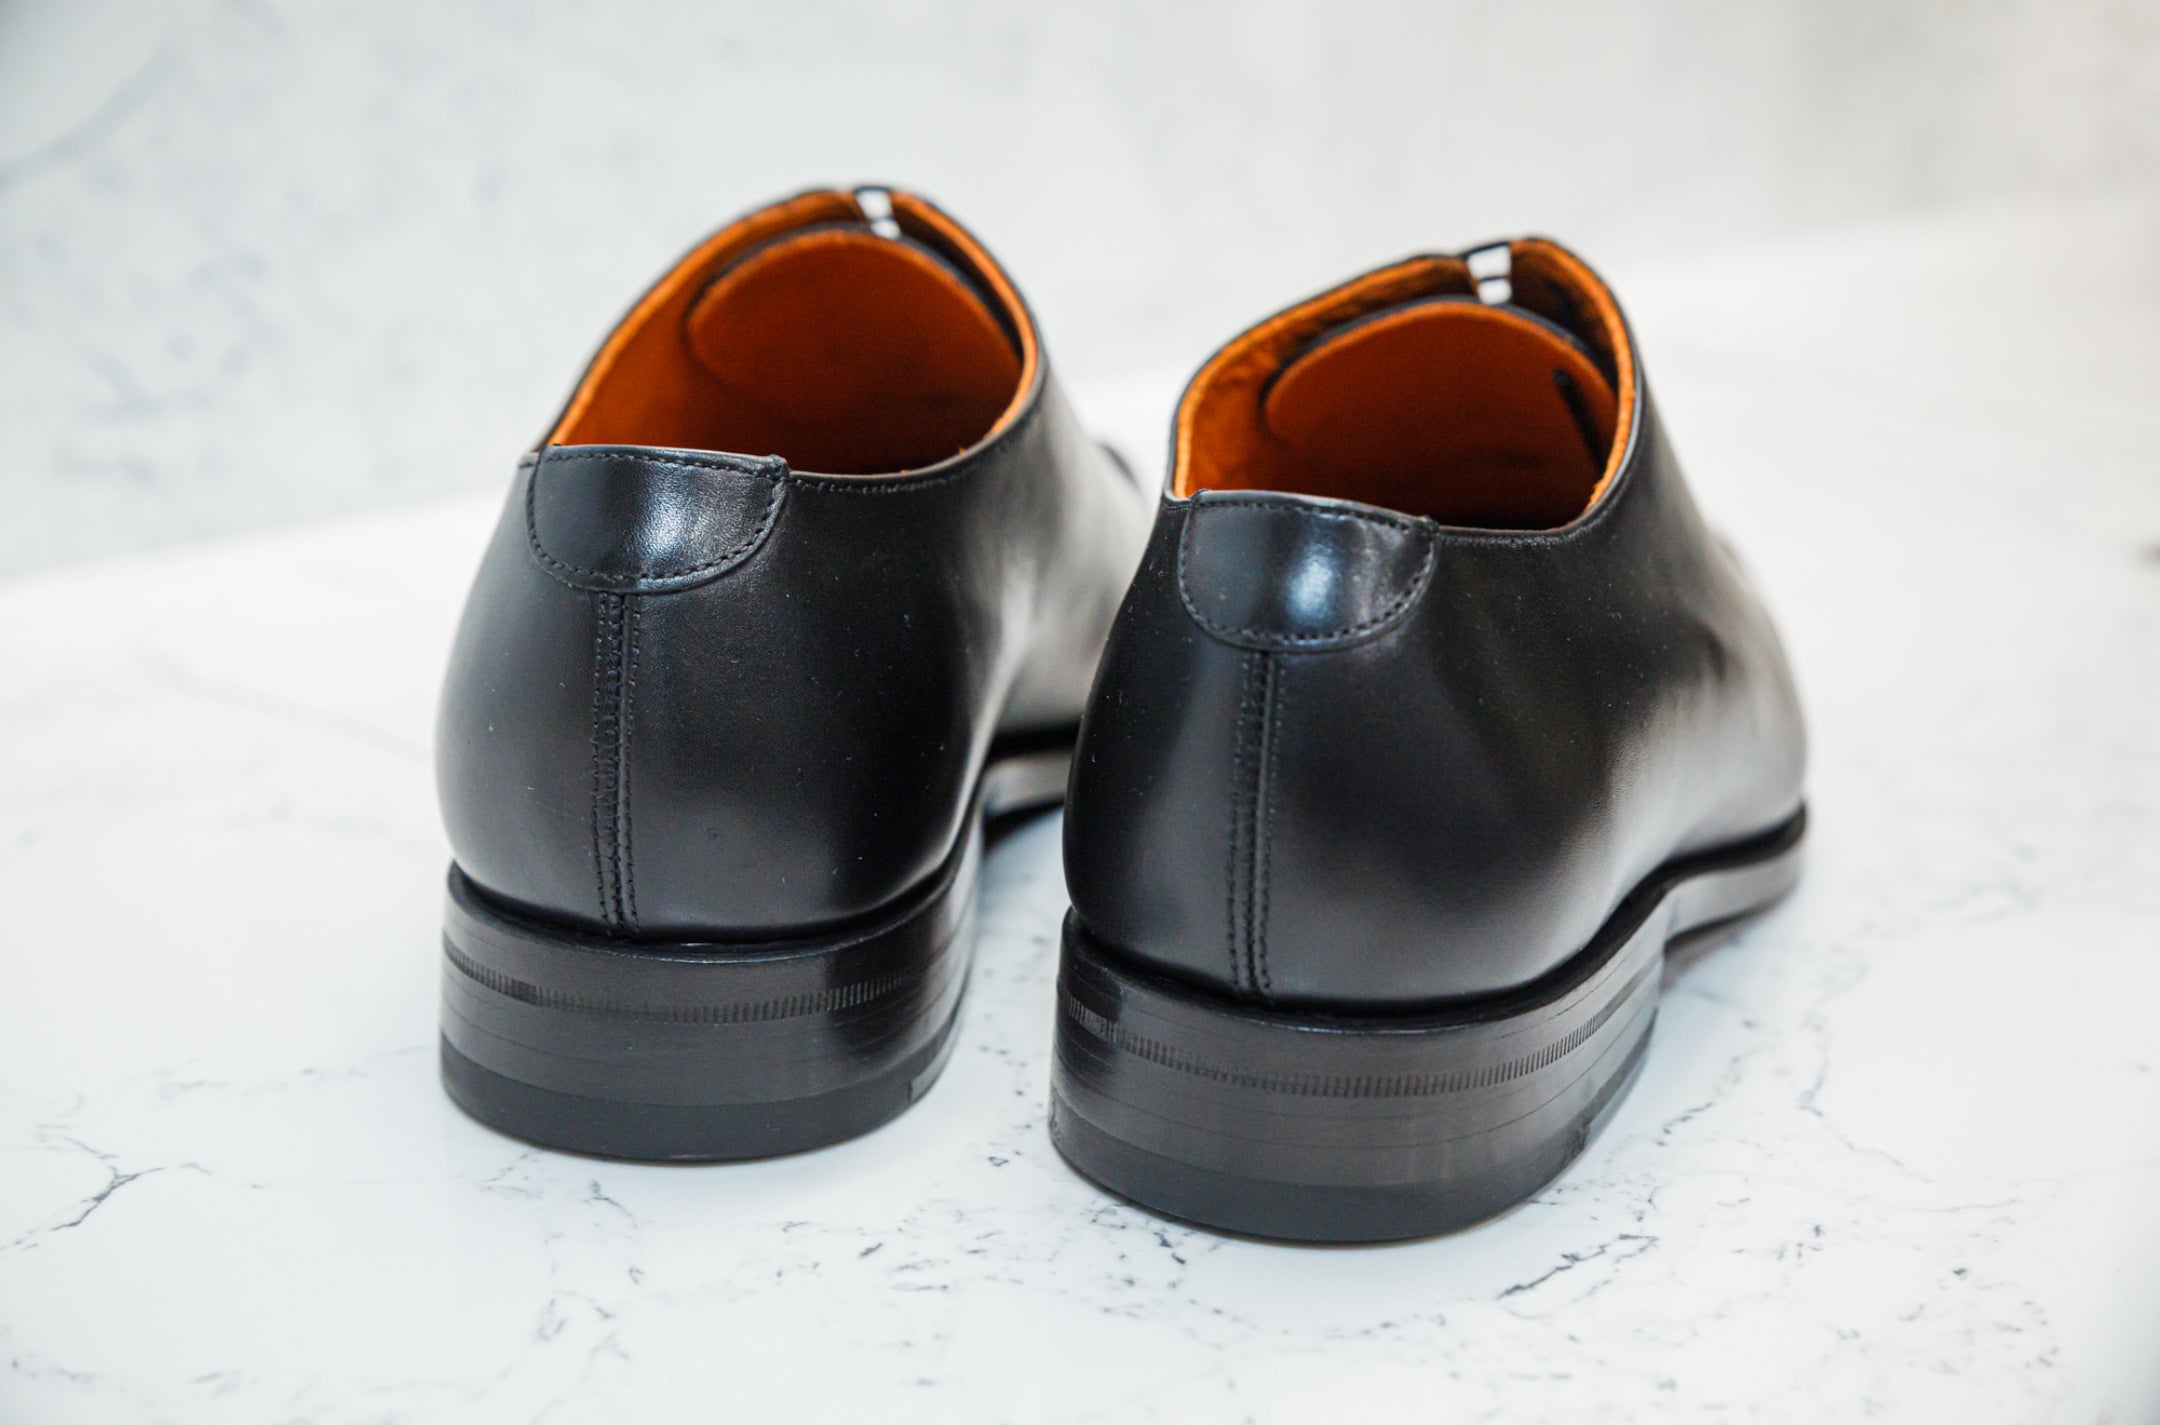 The Gavin Wholecut Shoes - Brogues by Urbbana